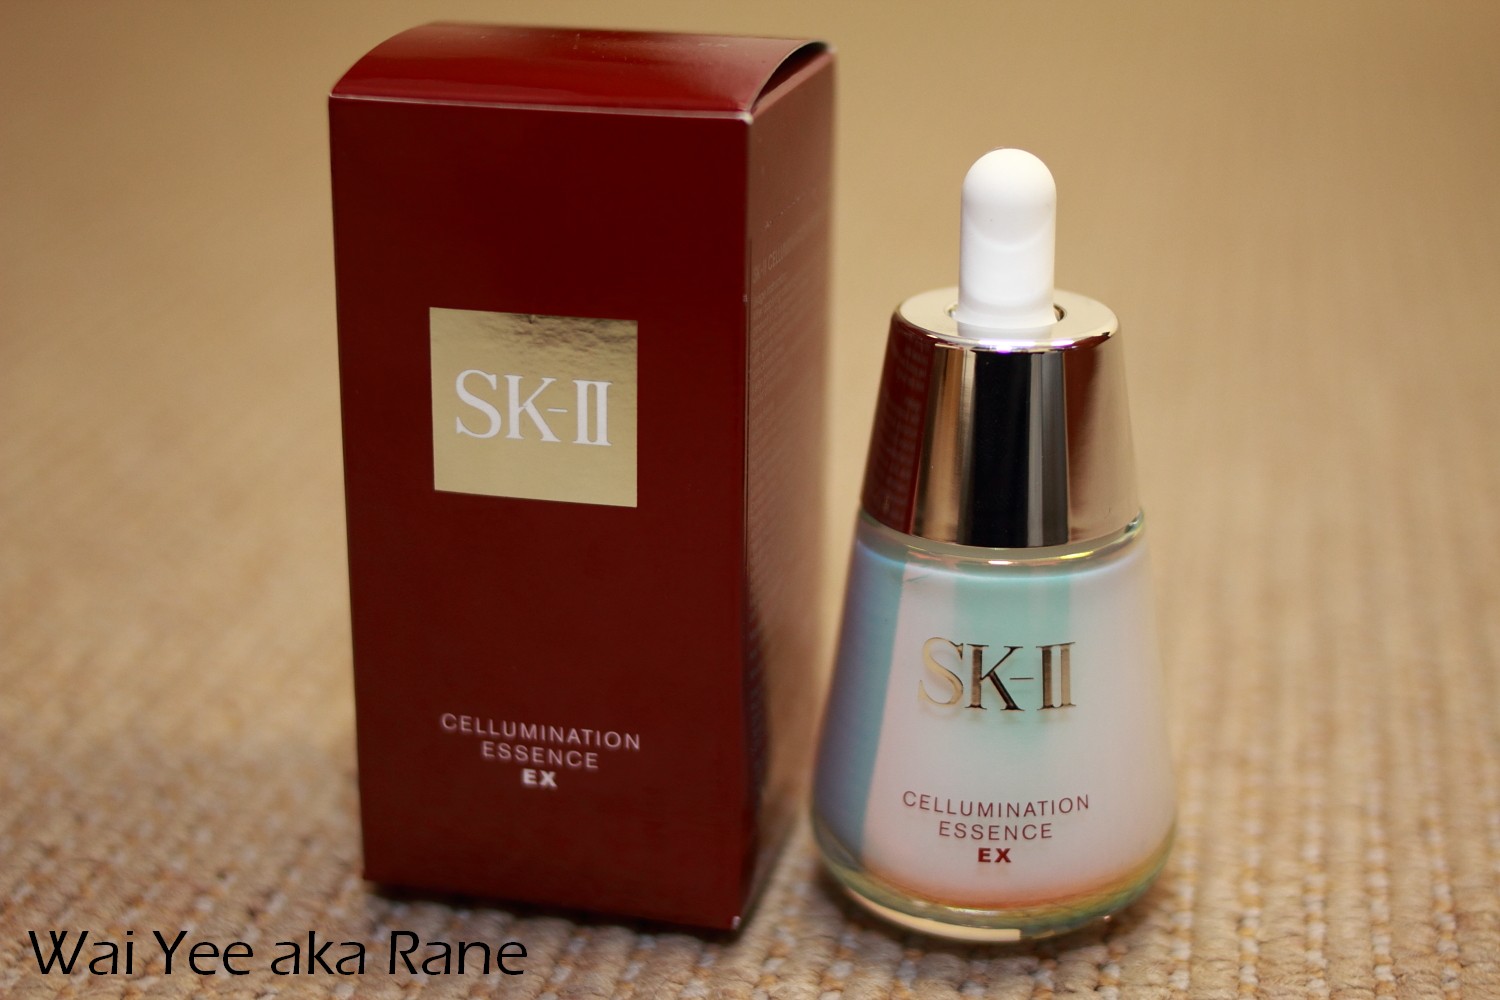 The Beauty Junkie - ranechin.com: Review: SK II Cellumination Essence 